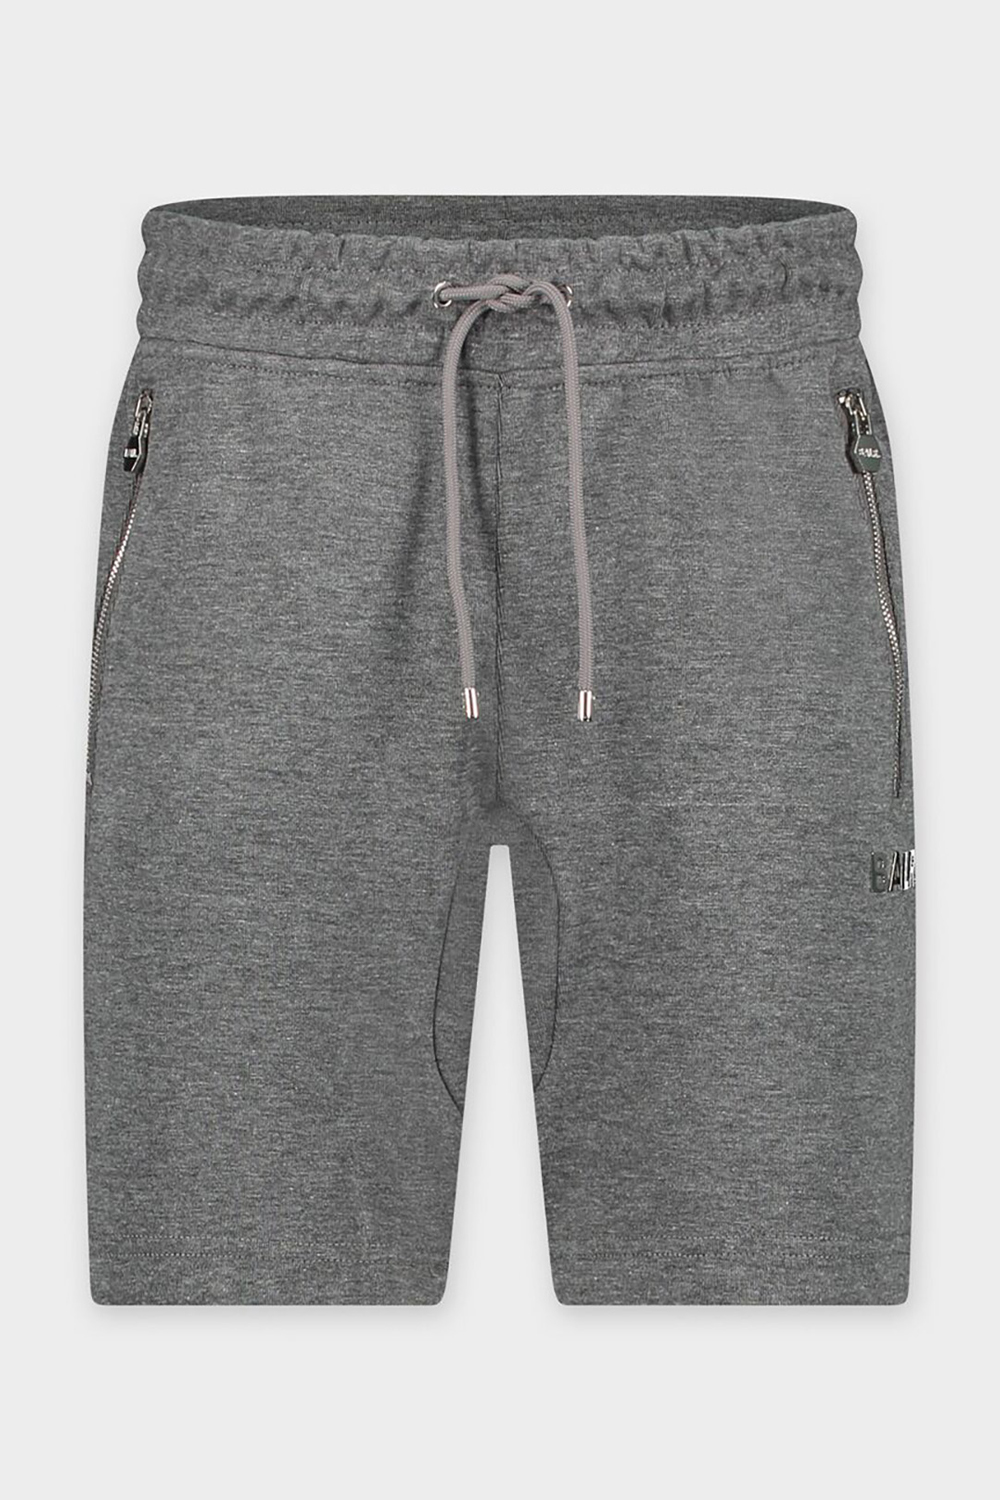 Shorts Q-Serie Grey